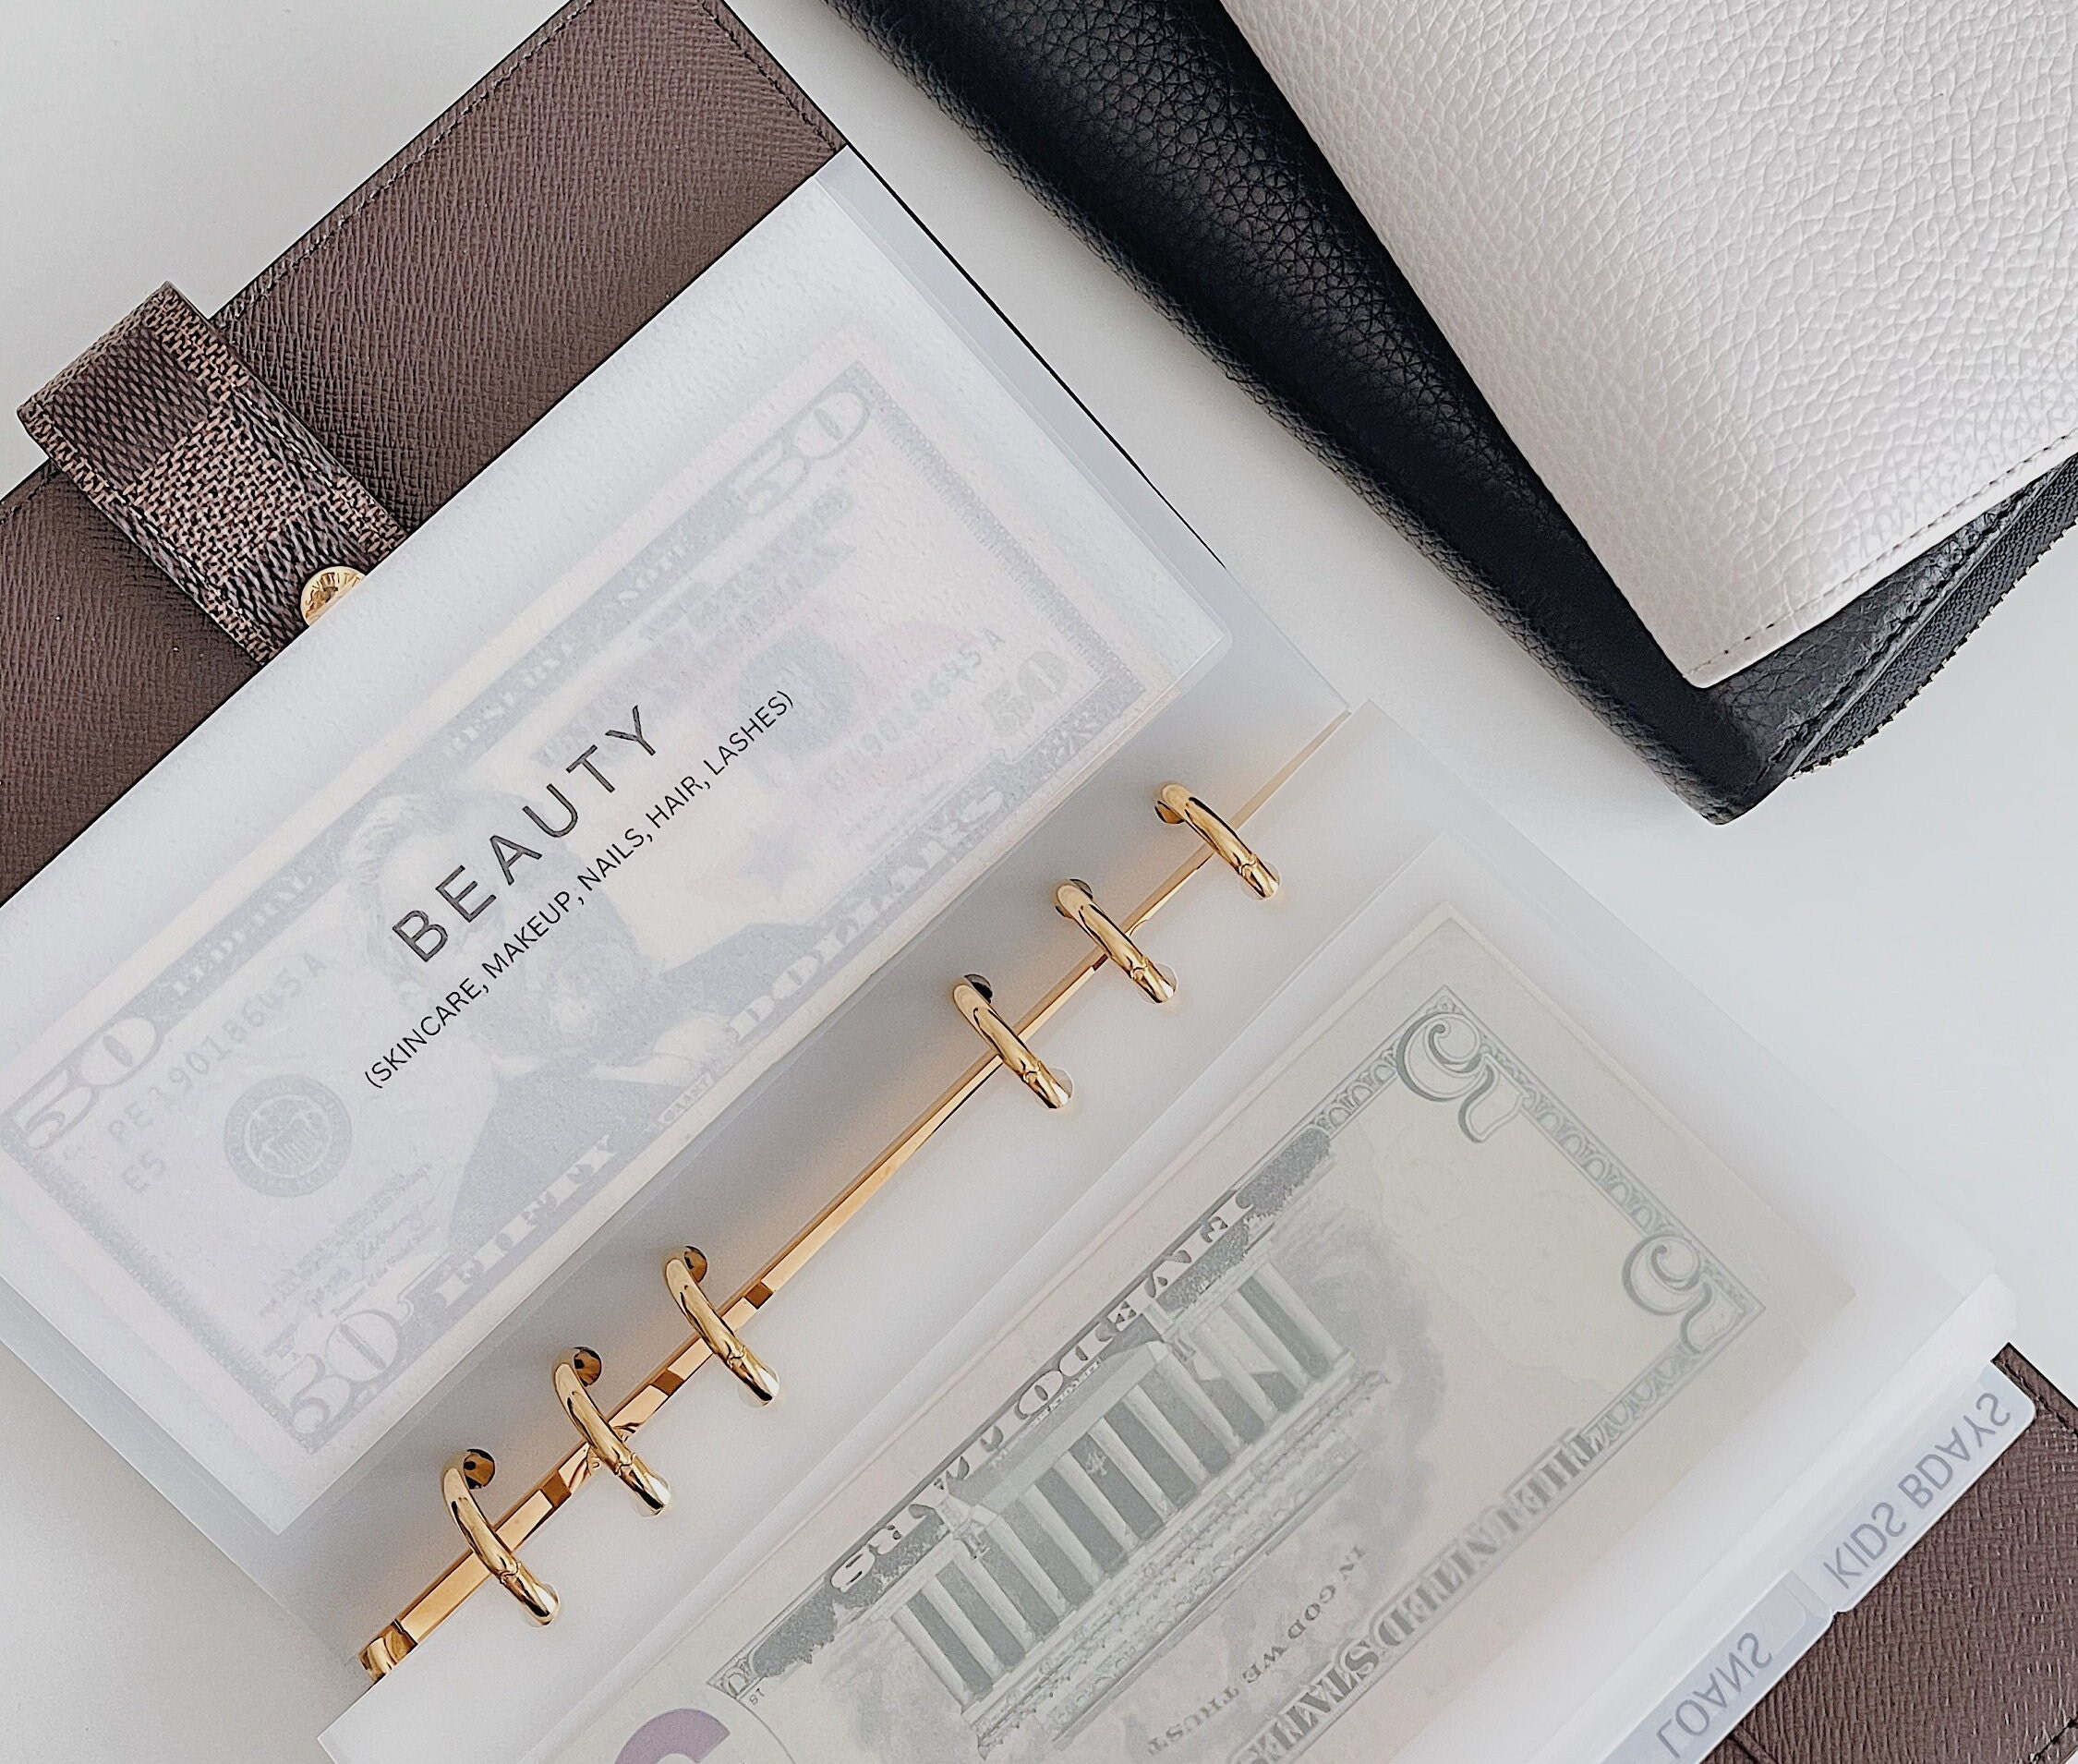 A6 Vellum/matte Clear Cash Envelopes With Custom Divider Tabs 